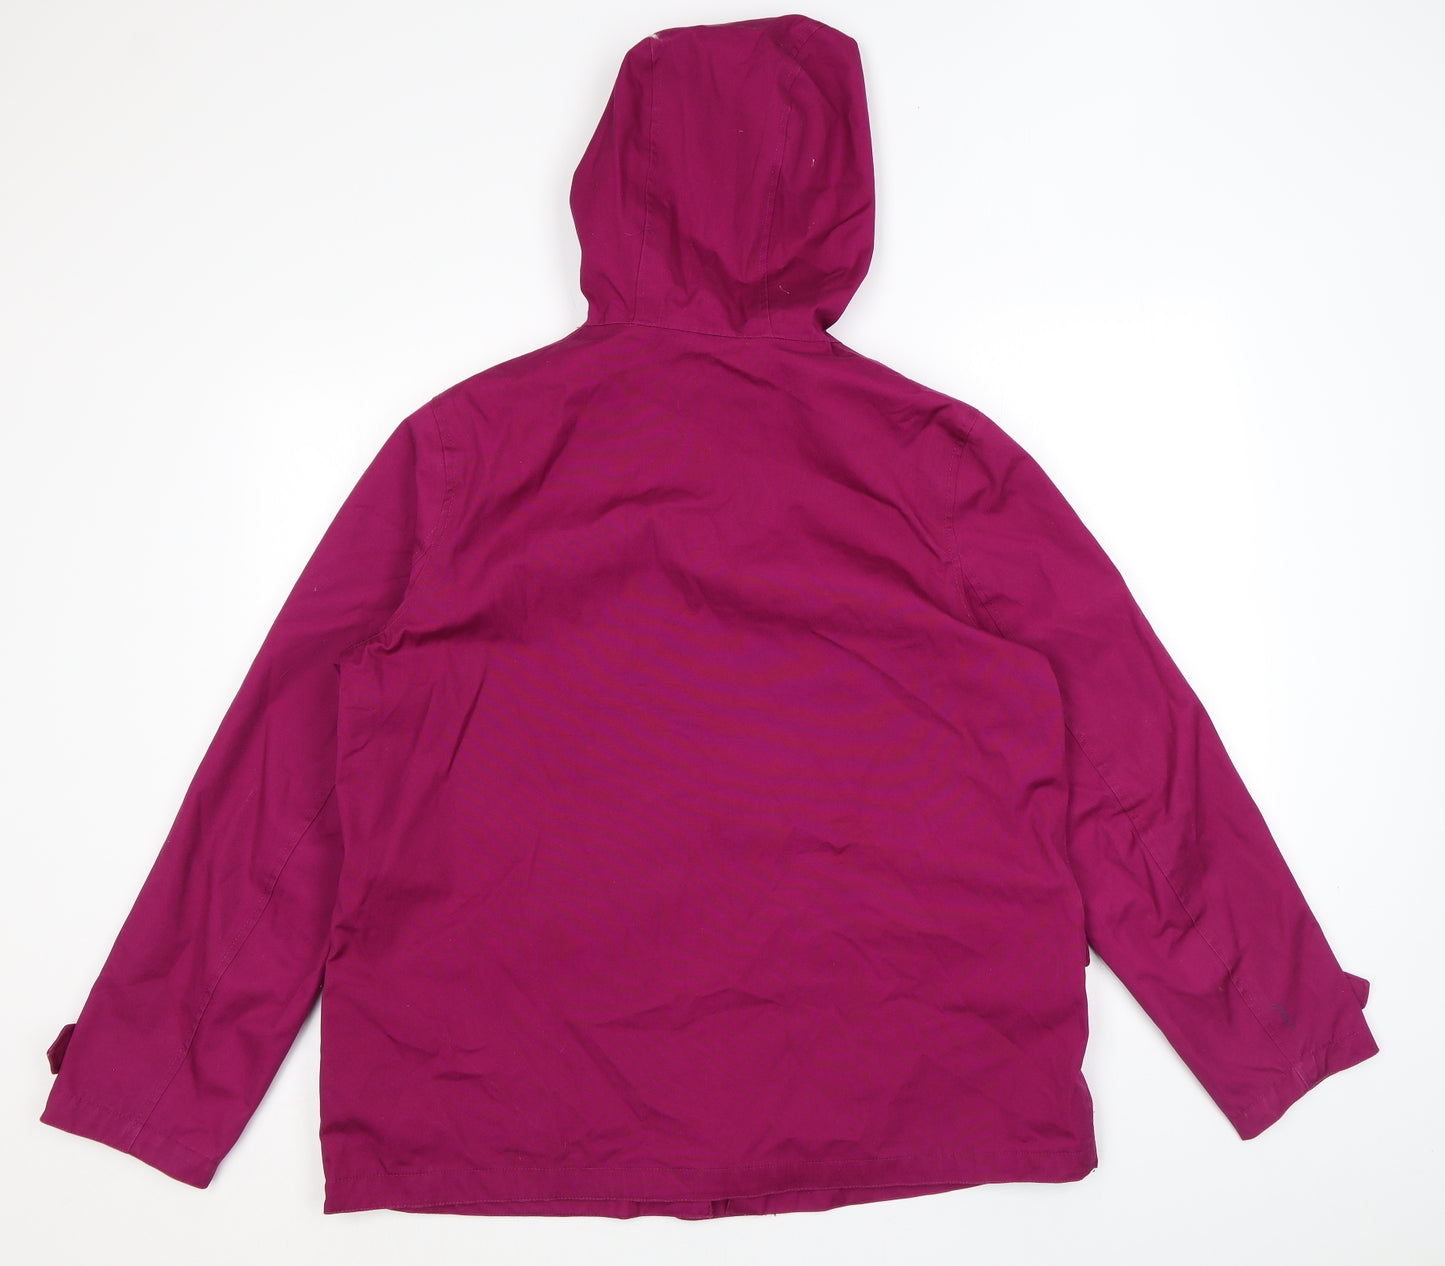 Joules Womens Pink Rain Coat Coat Size 16 Zip